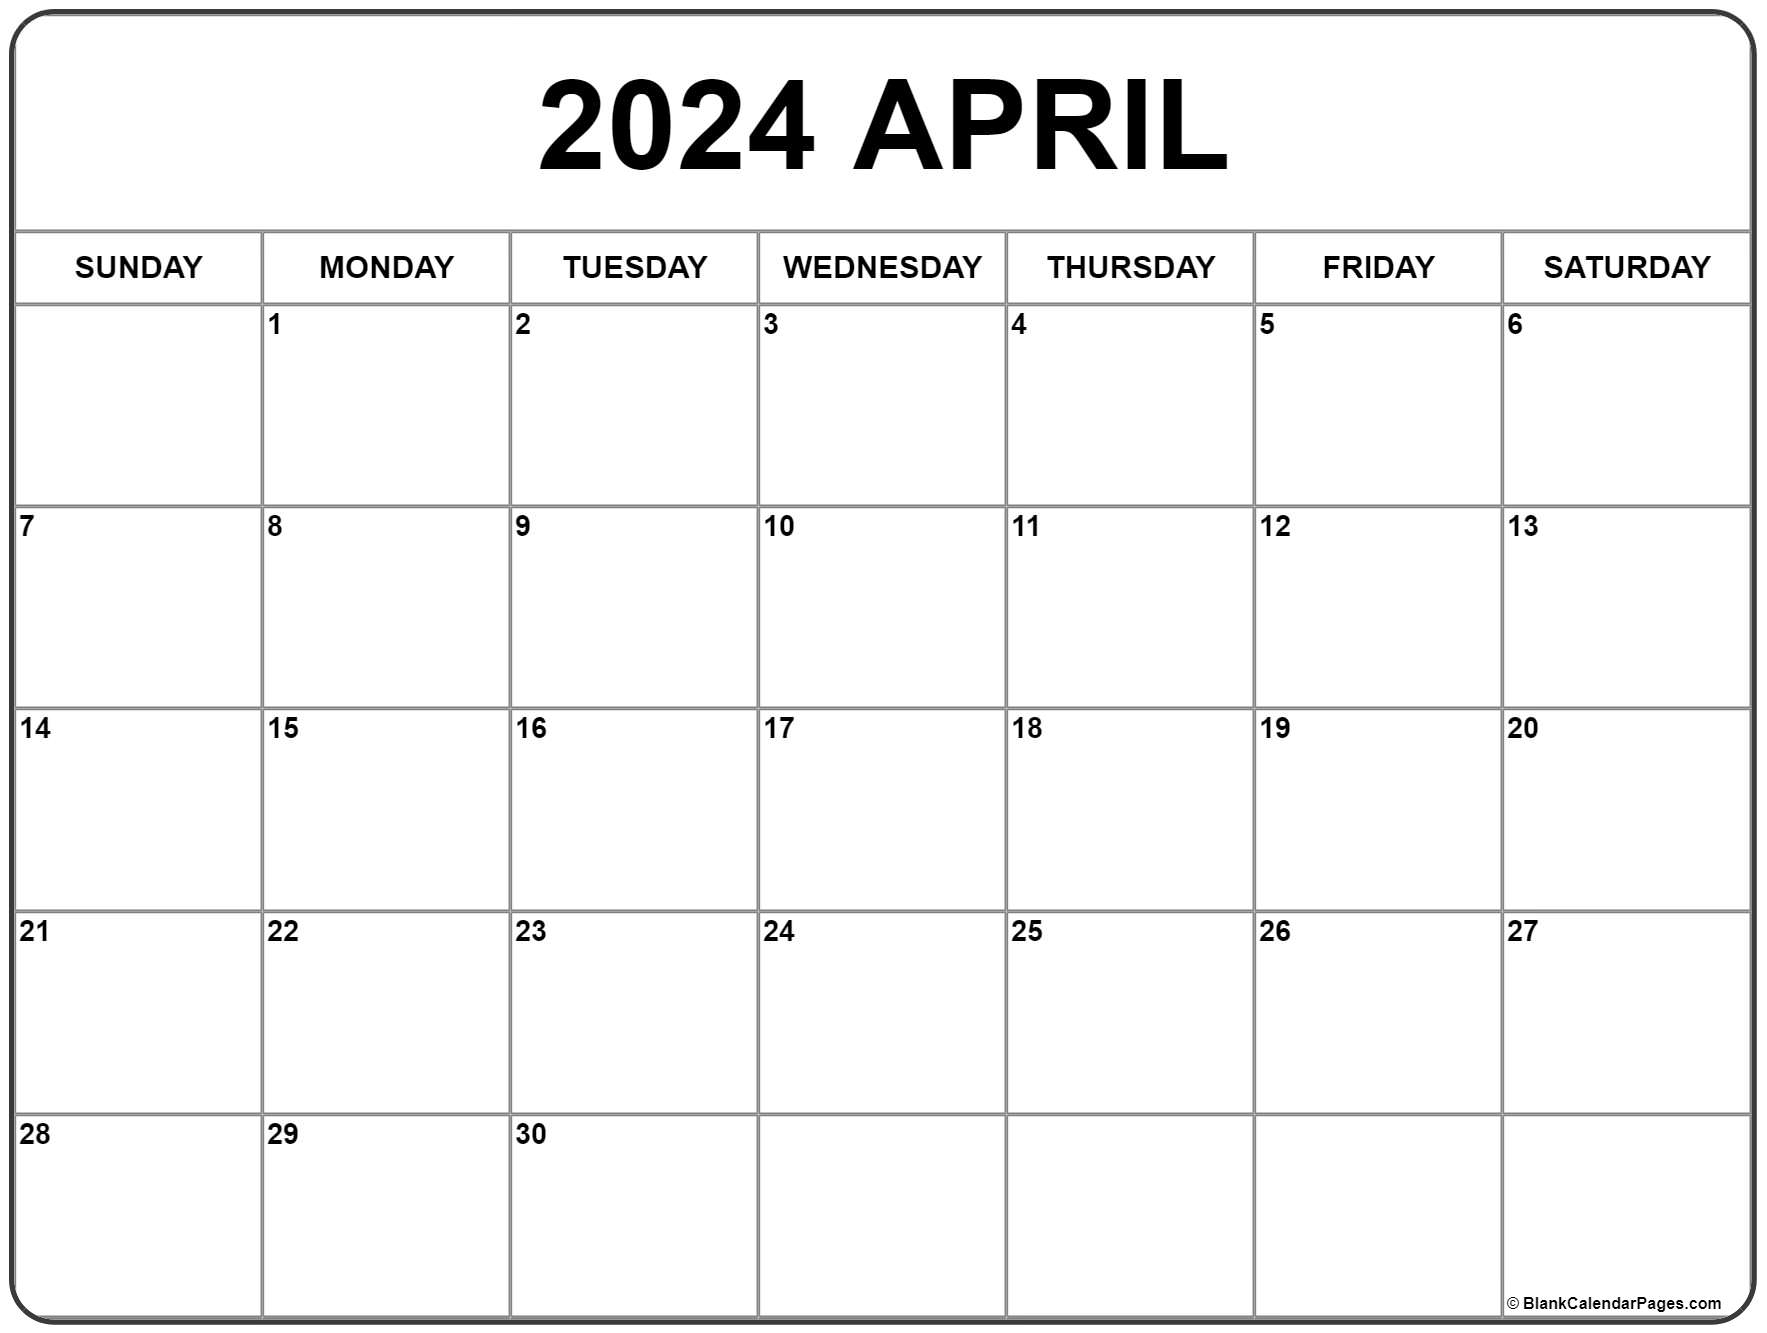 April 2024 Calendar | Free Printable Calendar with Editable April 2024 Calendar